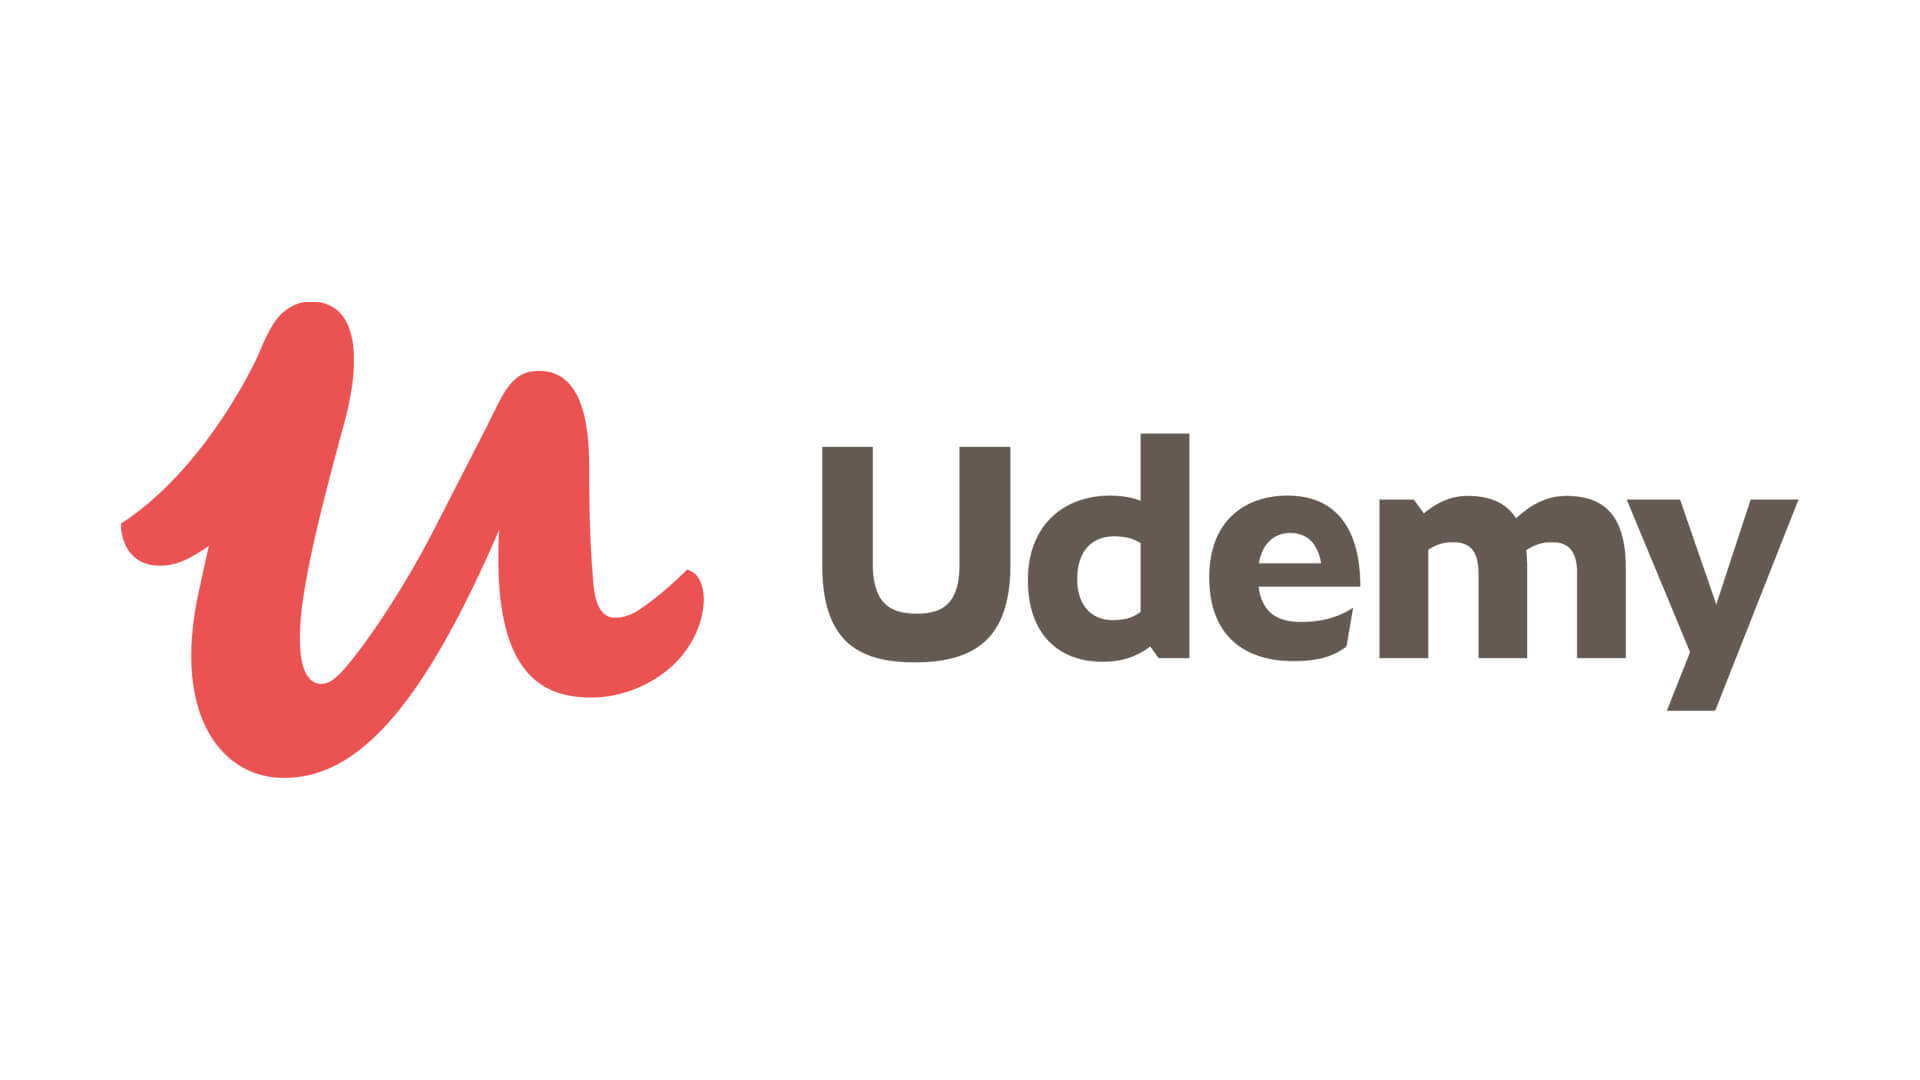 Udemy（世界最大級のオンライン学習サービス）でオンライン講座をスタートしました💻ネット発信から出版まで、幅広いコースを提供予定です